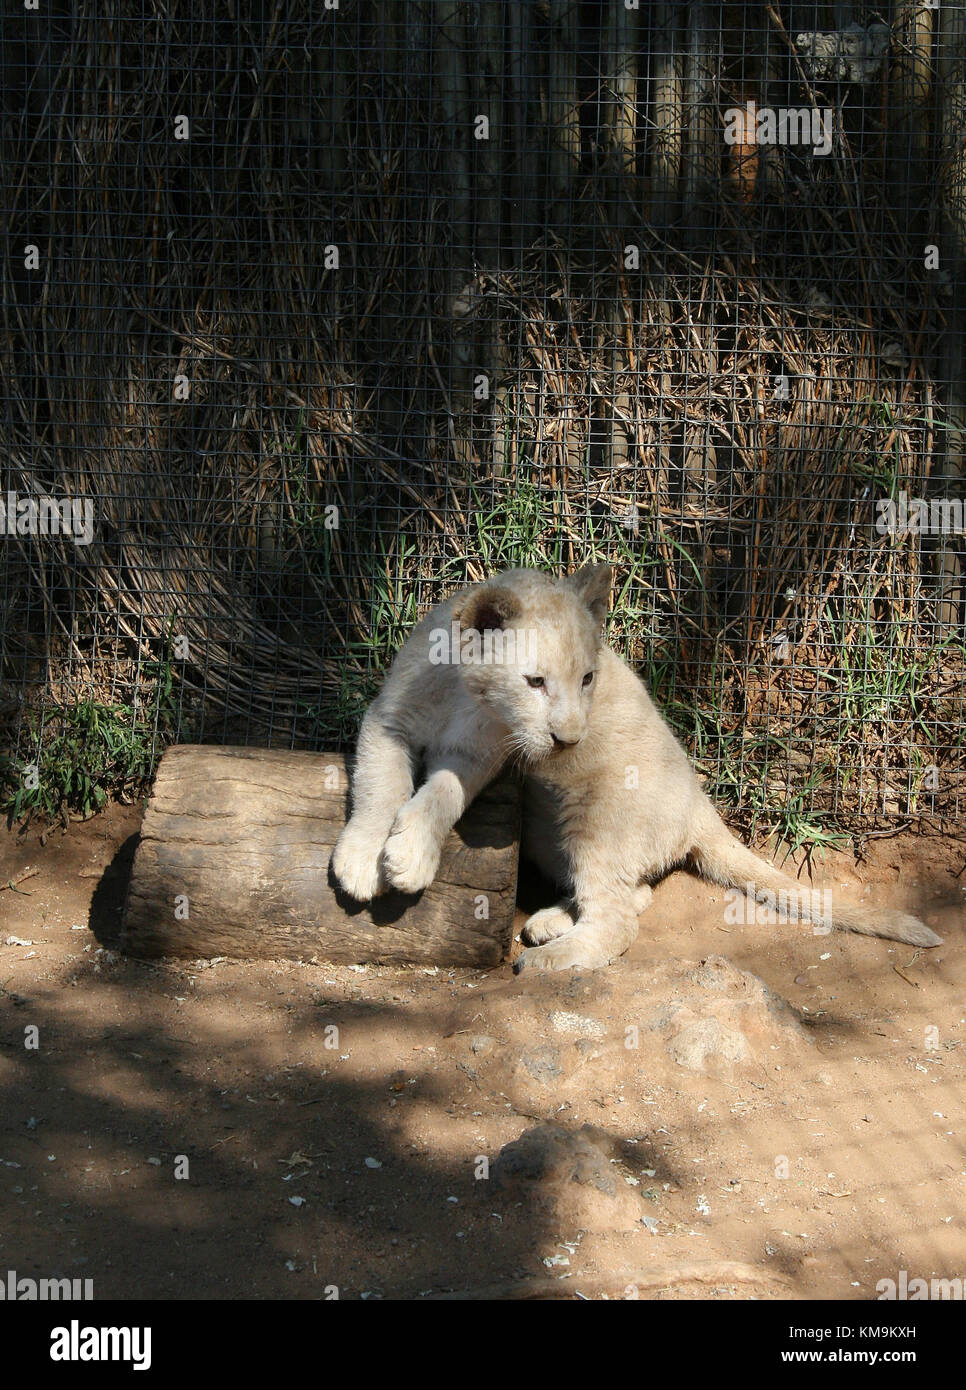 Lion Park, White lion cub lying on a log, Panthera leo krugeri Stock Photo